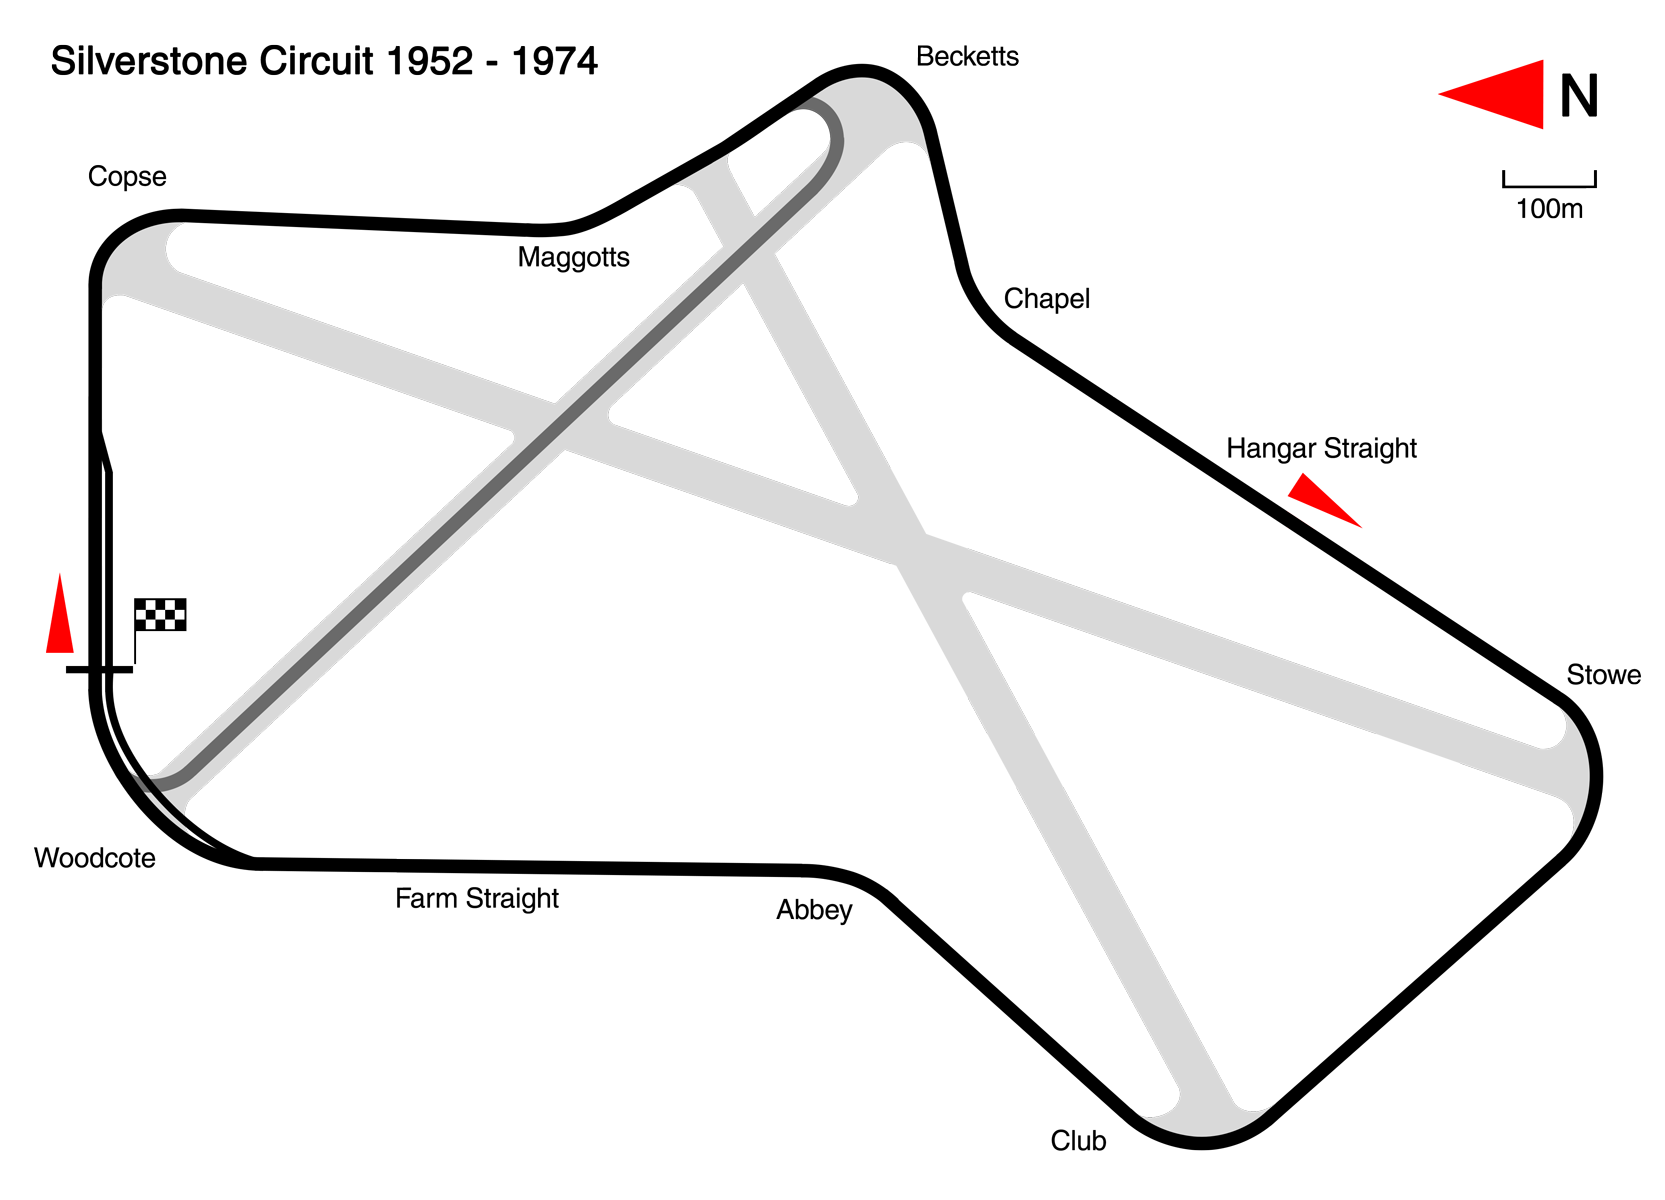 Plan du circuit Silverstone 